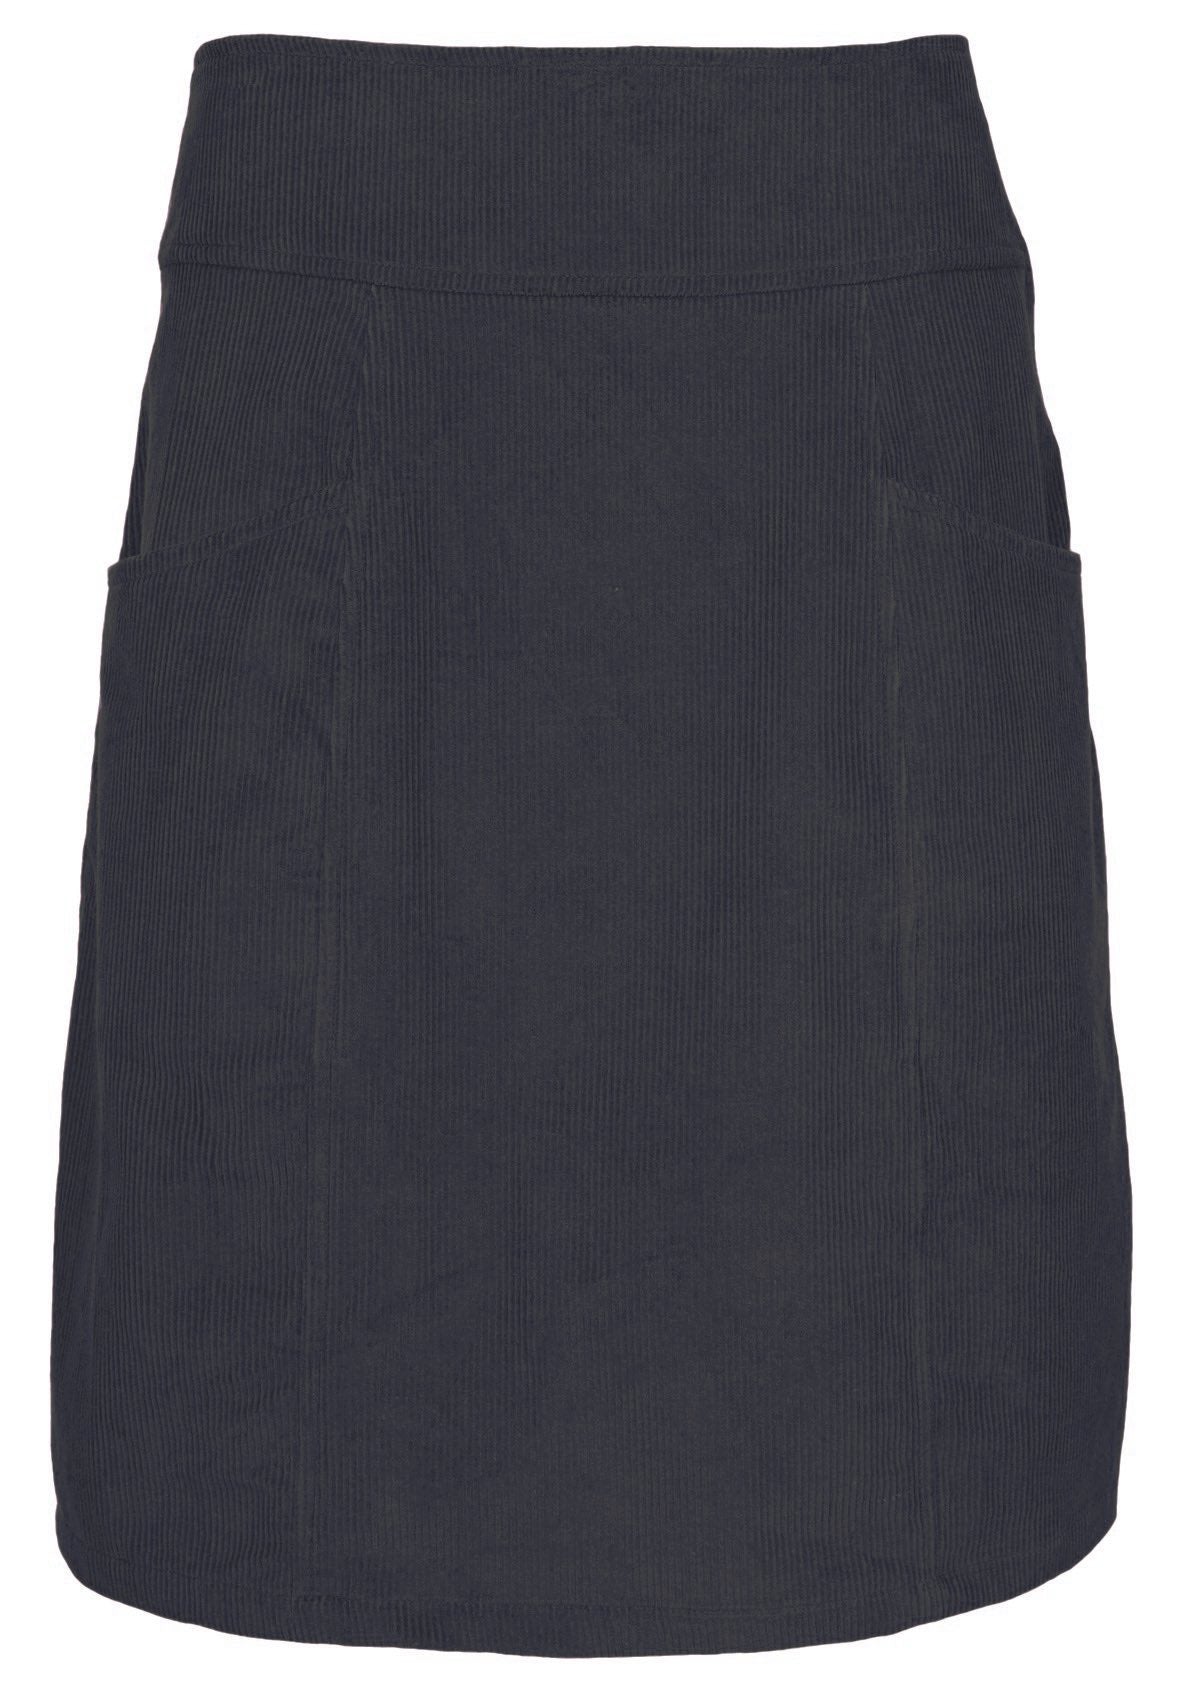 100% cotton corduroy mid length skirt in a deep bluish-grey colour. 